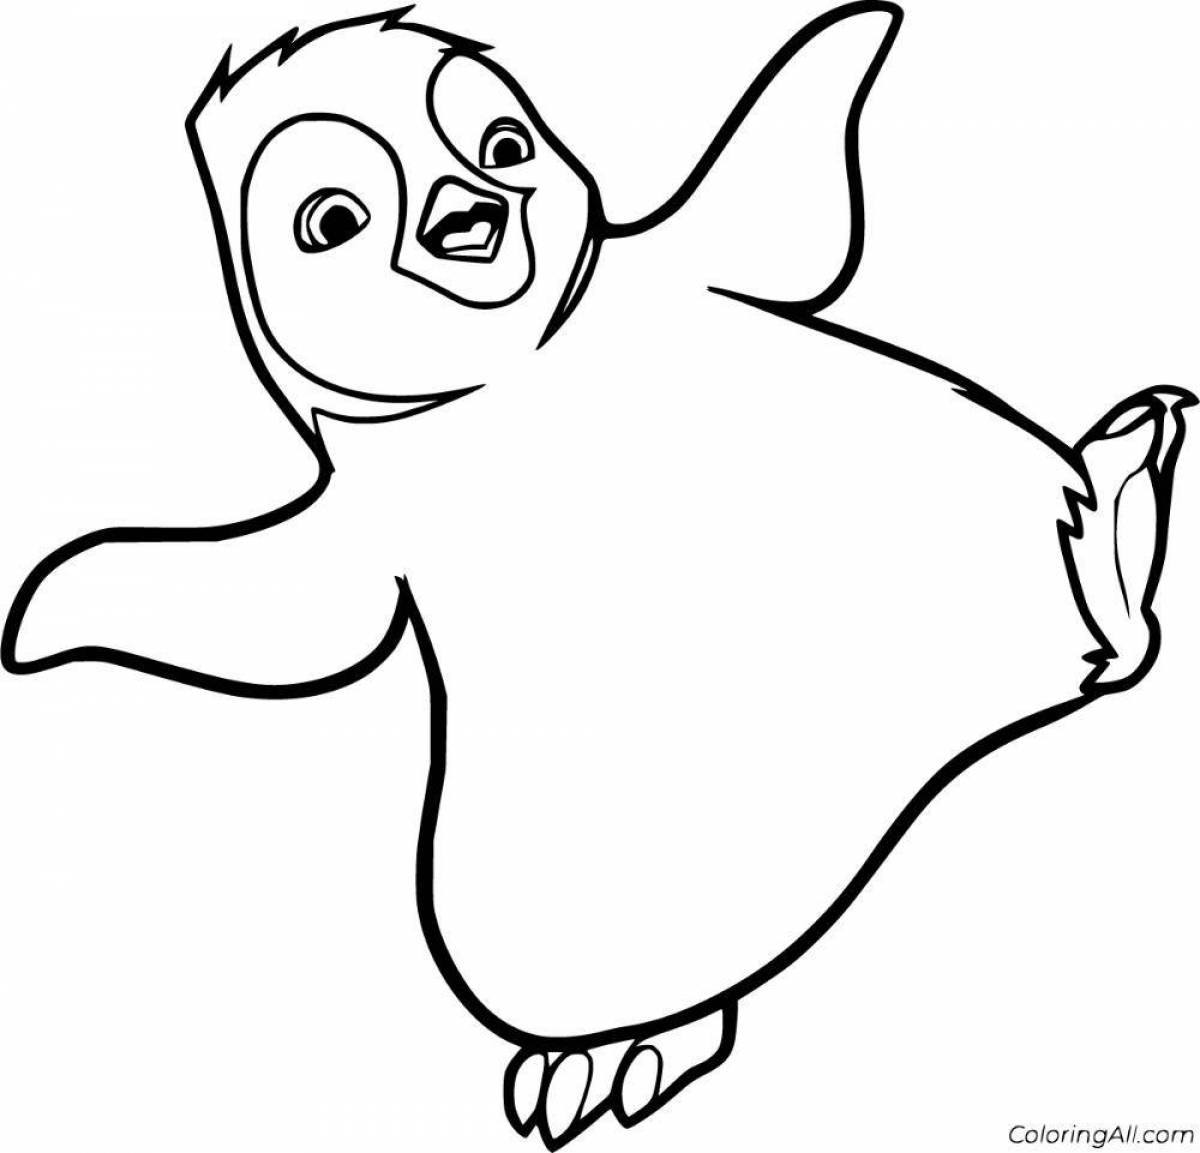 Gleeful coloring page забавный пингвин